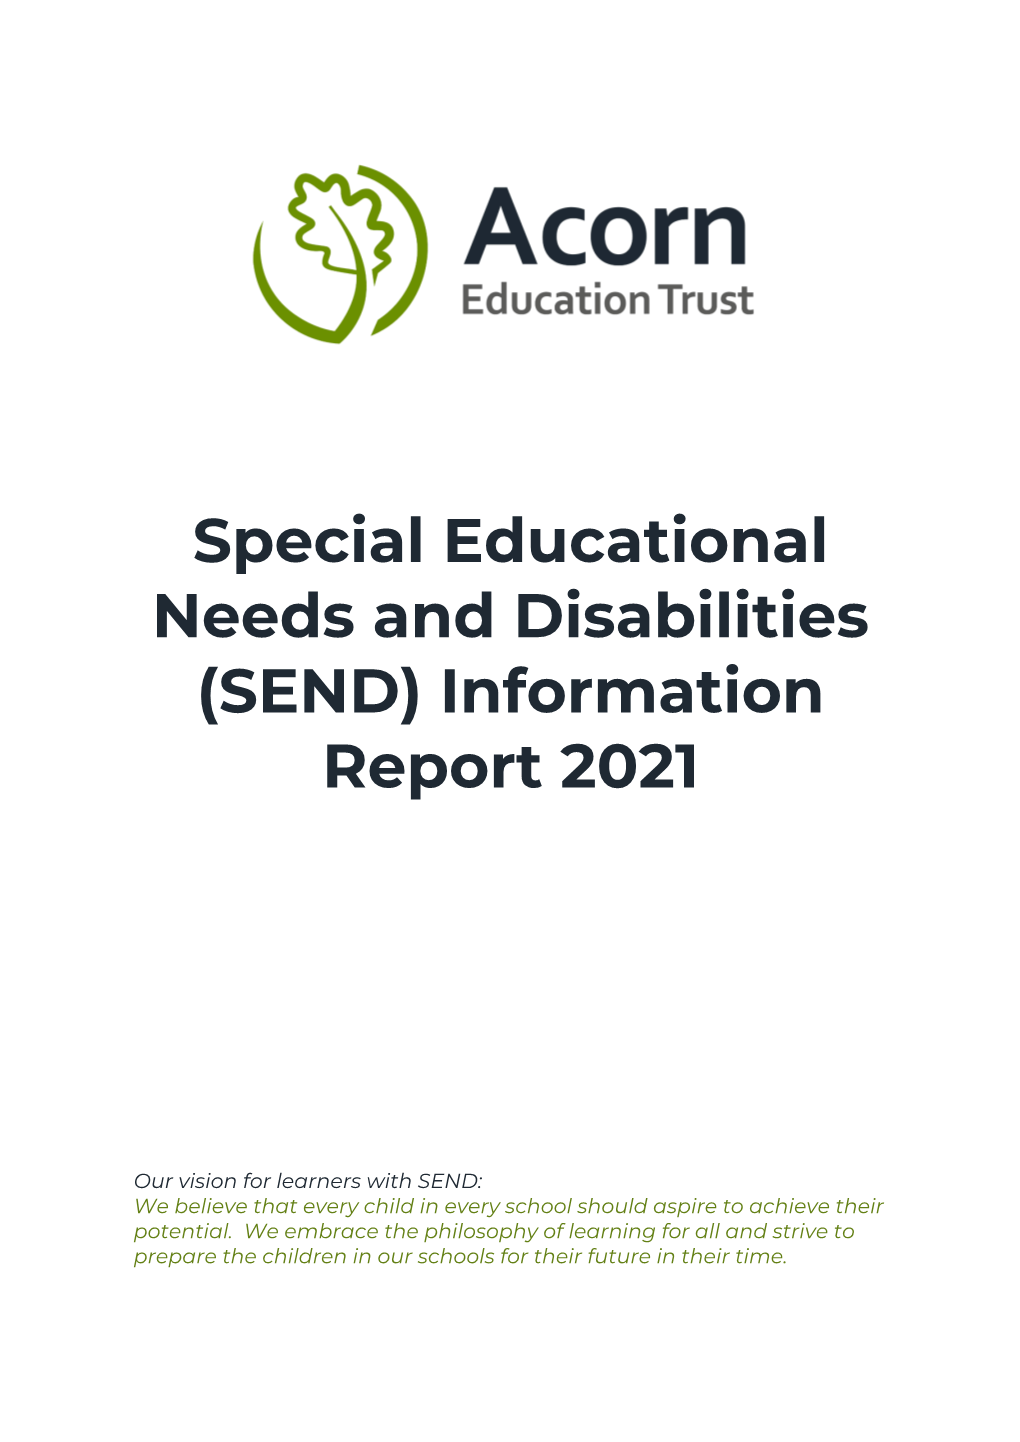 (SEND) Information Report 2021